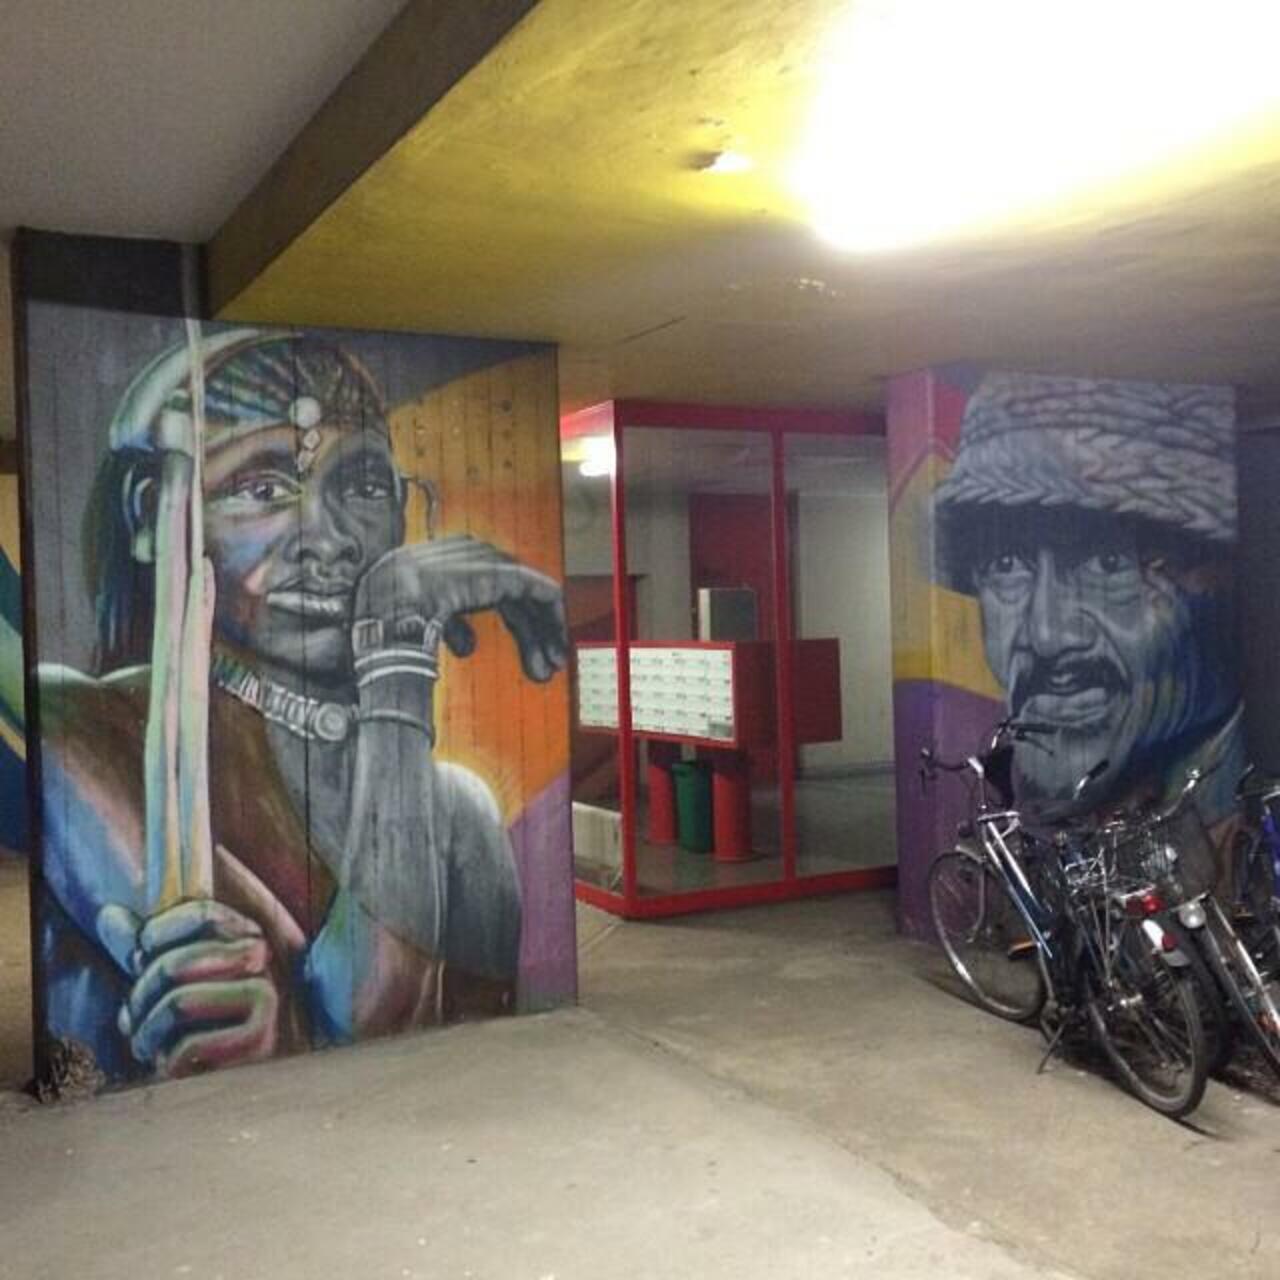 #Berlin #Allemagne #streetart #street #art #urbanart #urbantag #graffiti #streetartberlin by becombegeek http://t.co/XxrgzK39M1